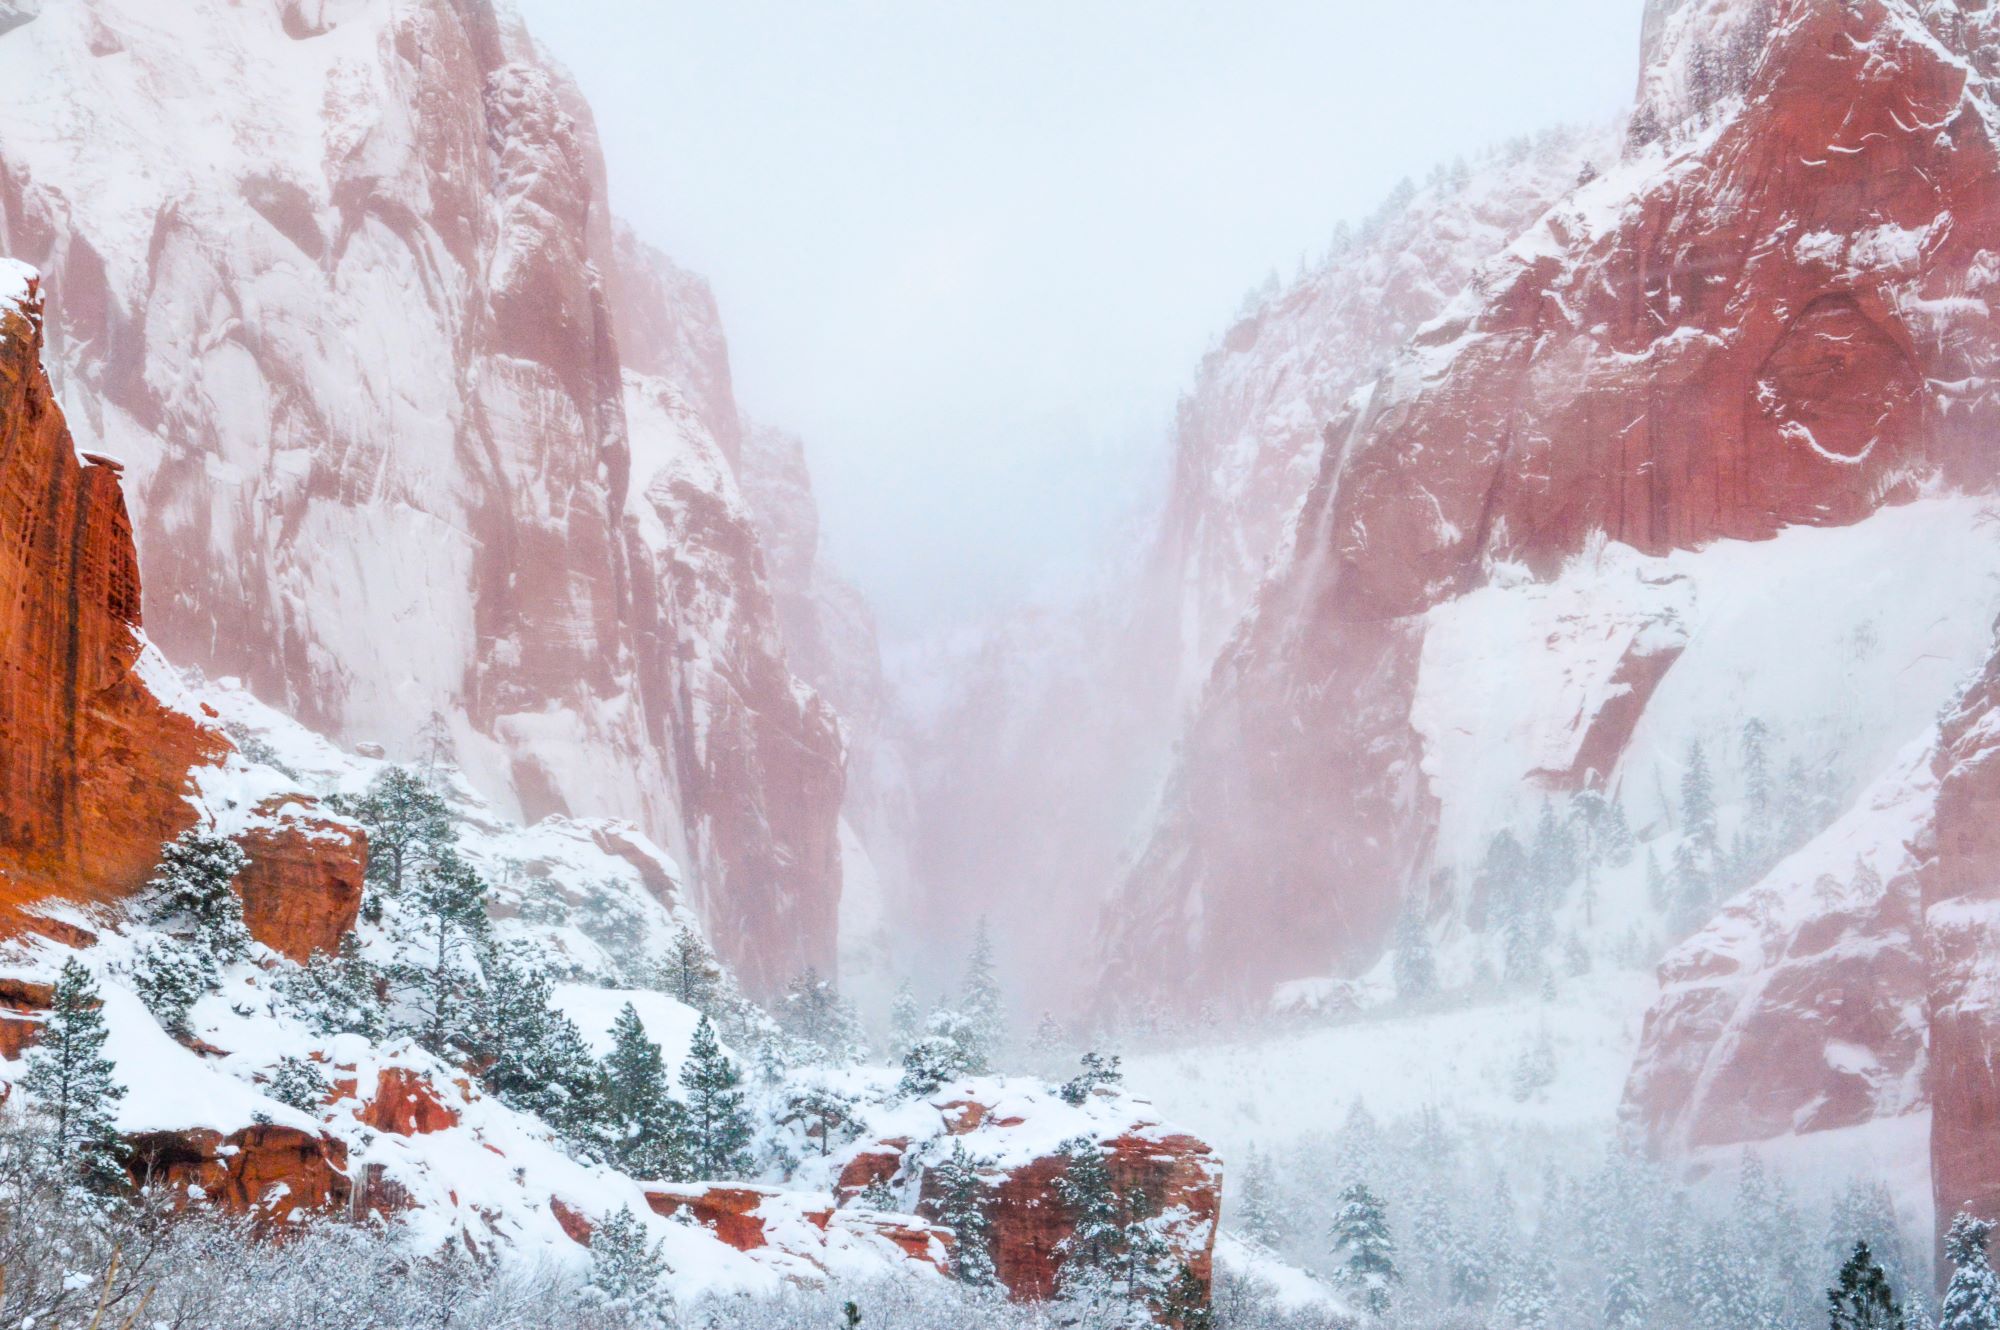 Kolob Canyon in winter.